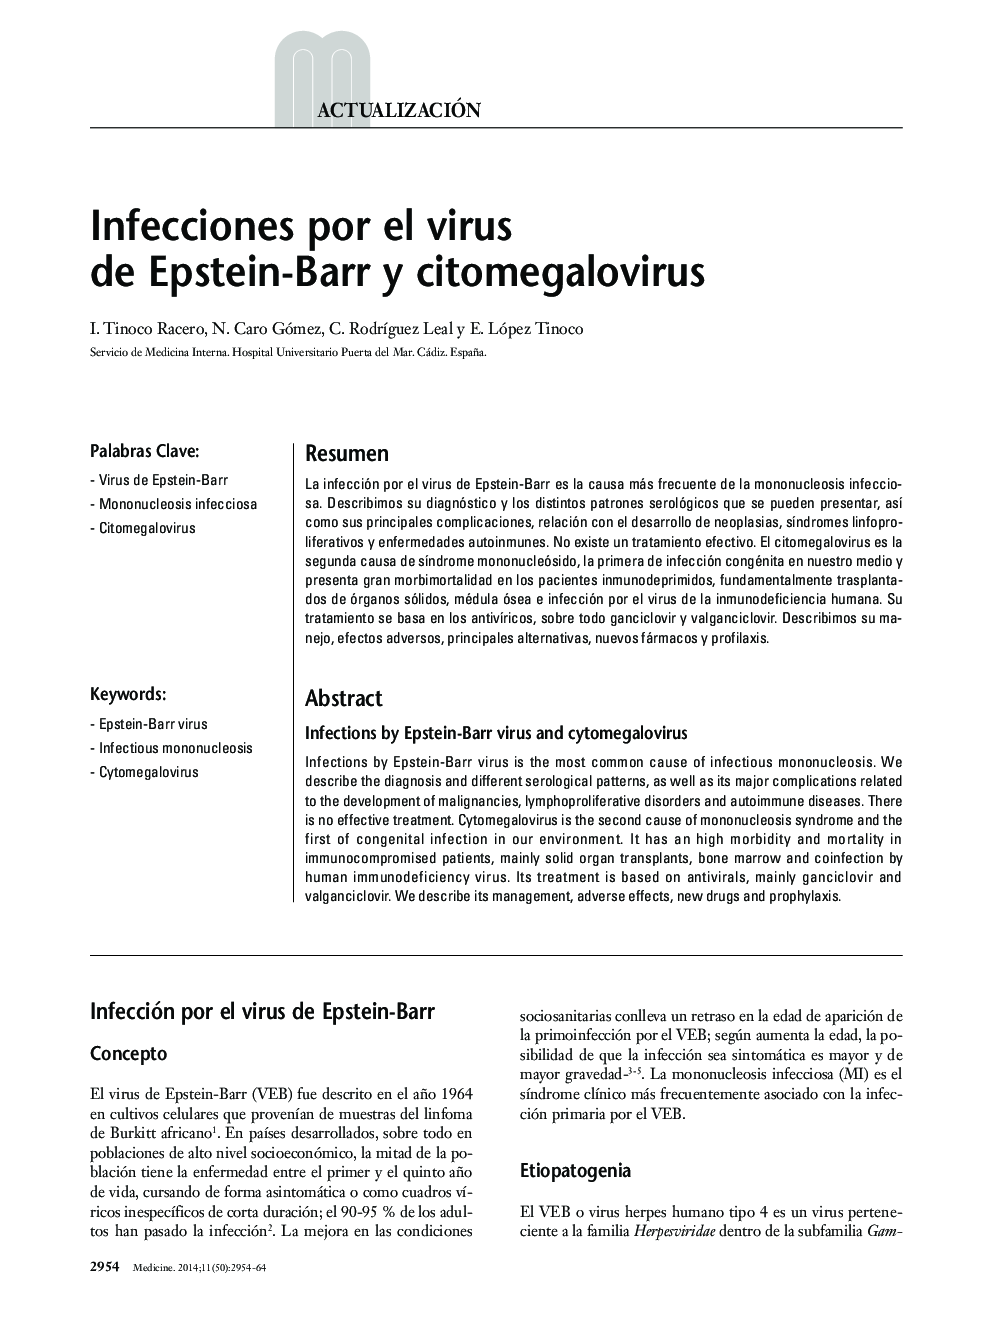 ویروس عفونت اپشتین بار و سیتومگالوویروس 